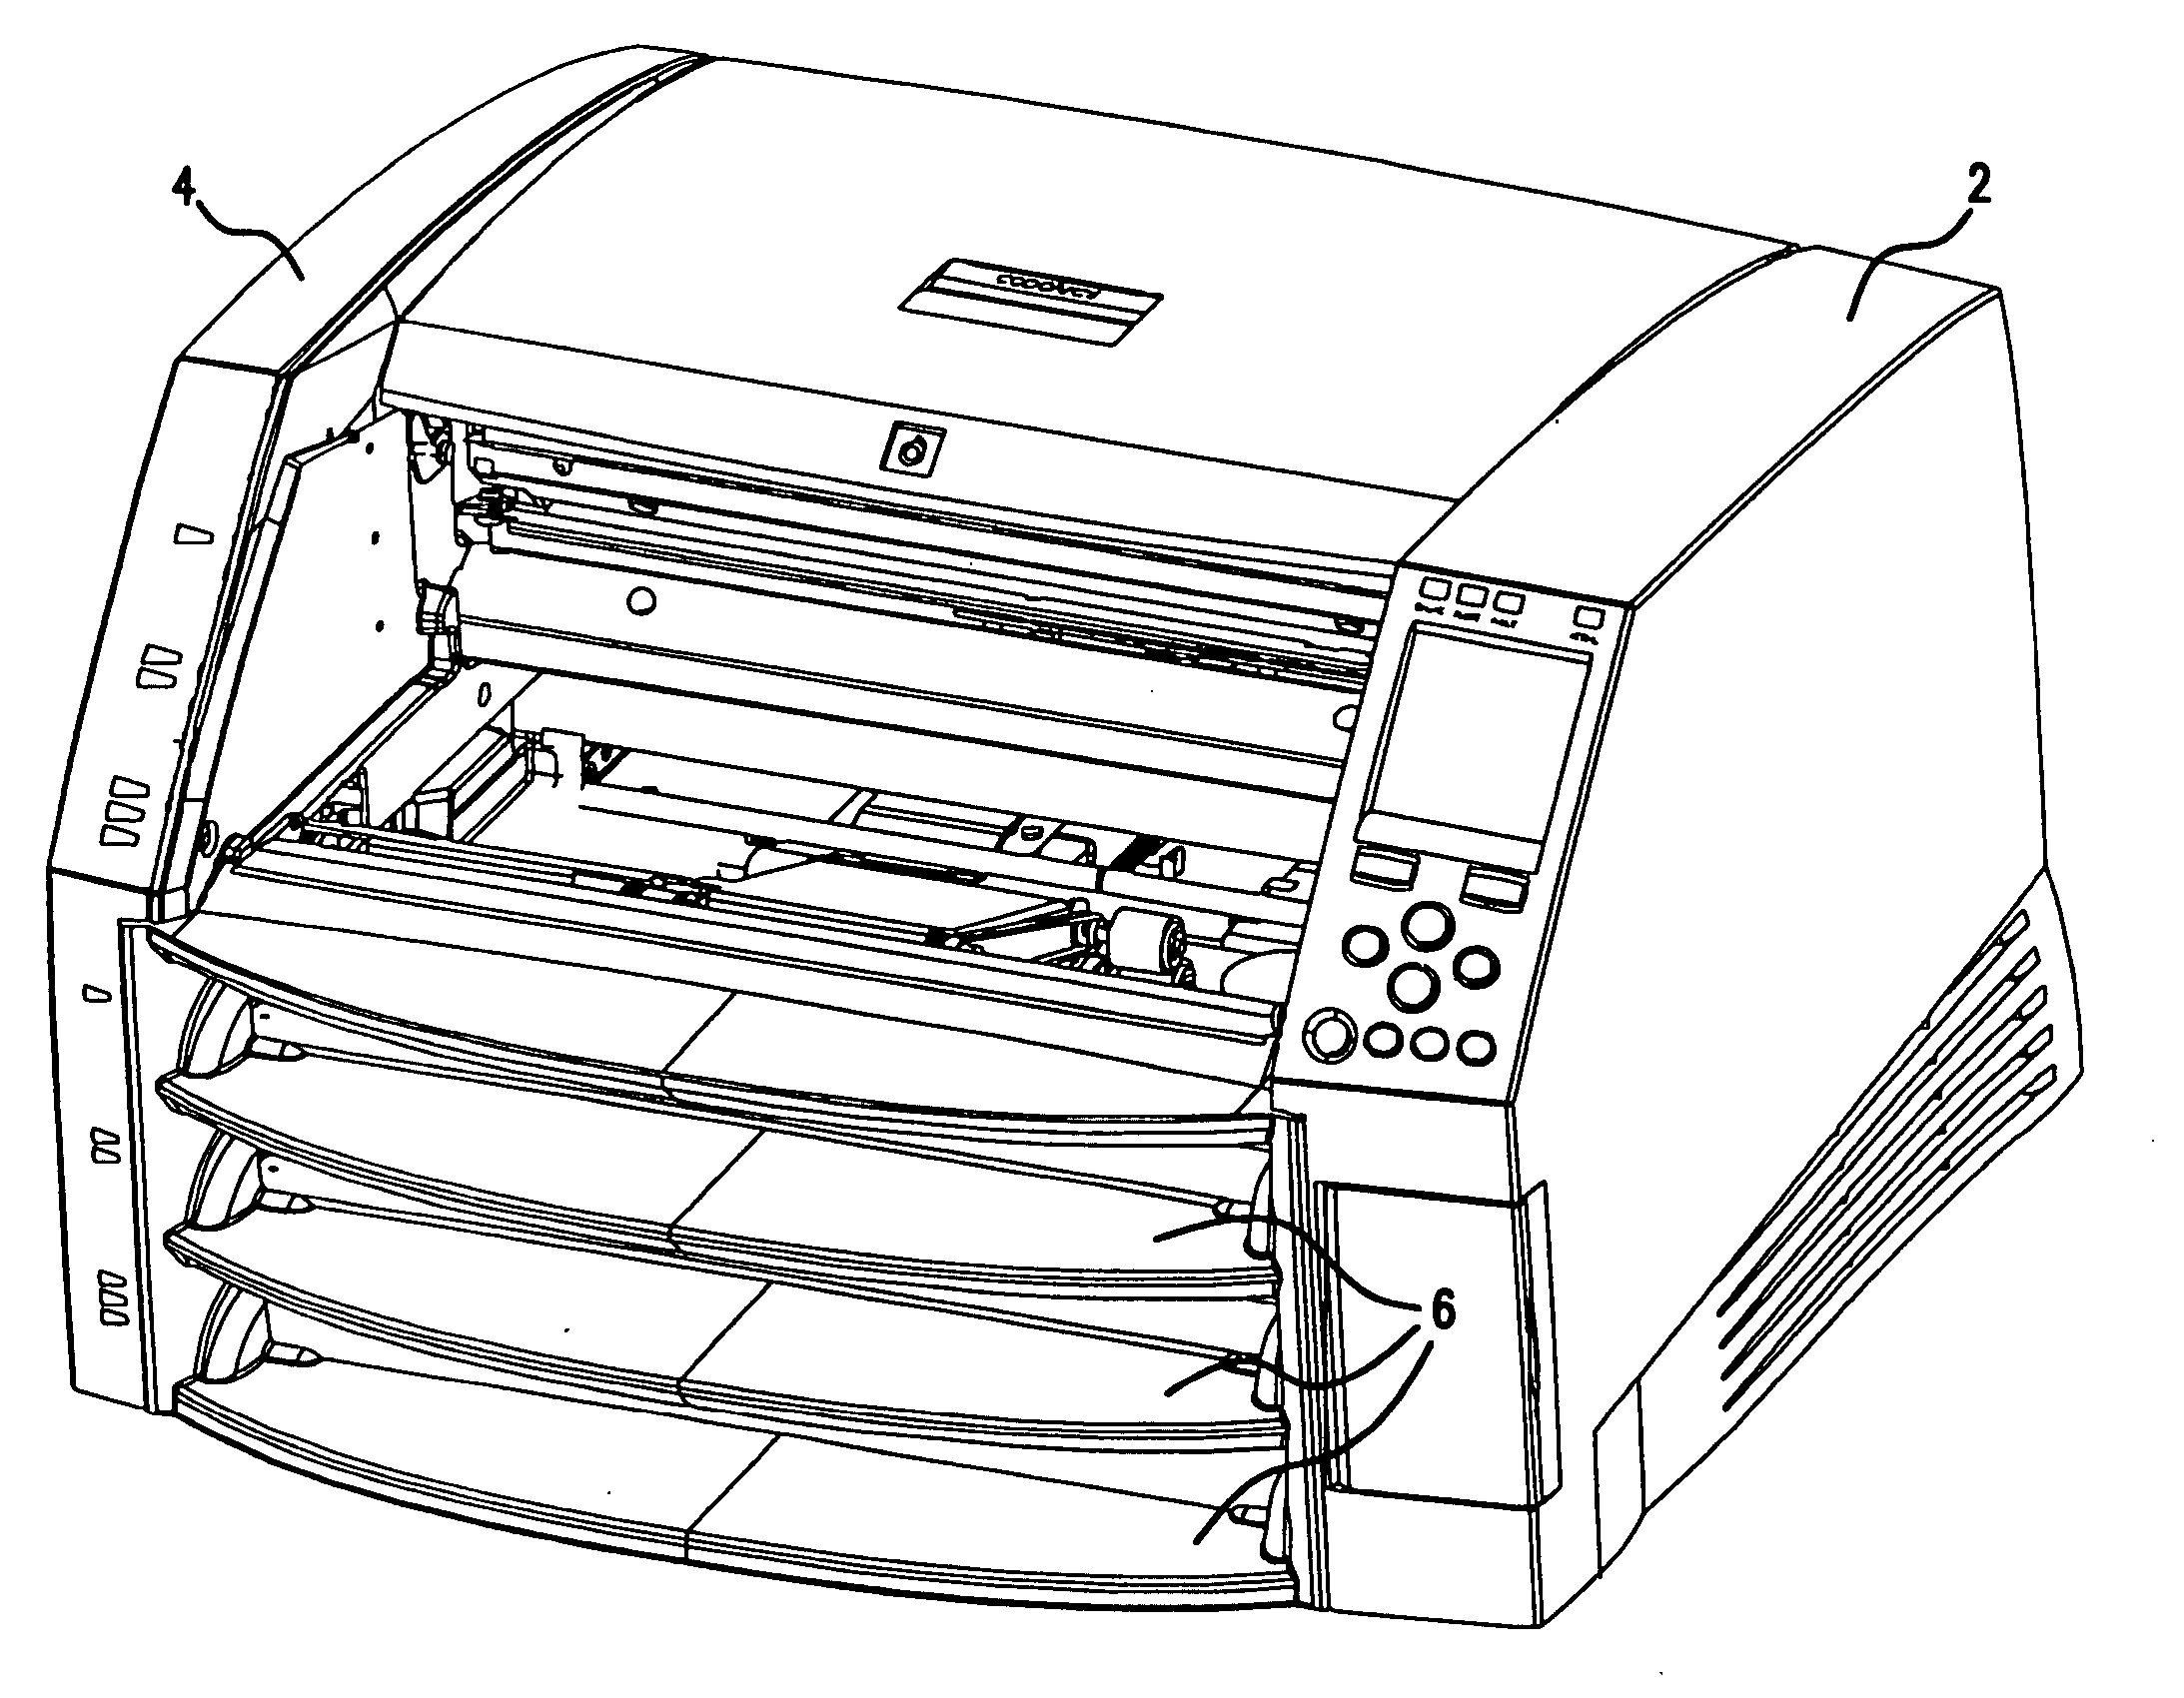 Multi-media printer with removable memory storing printer settings